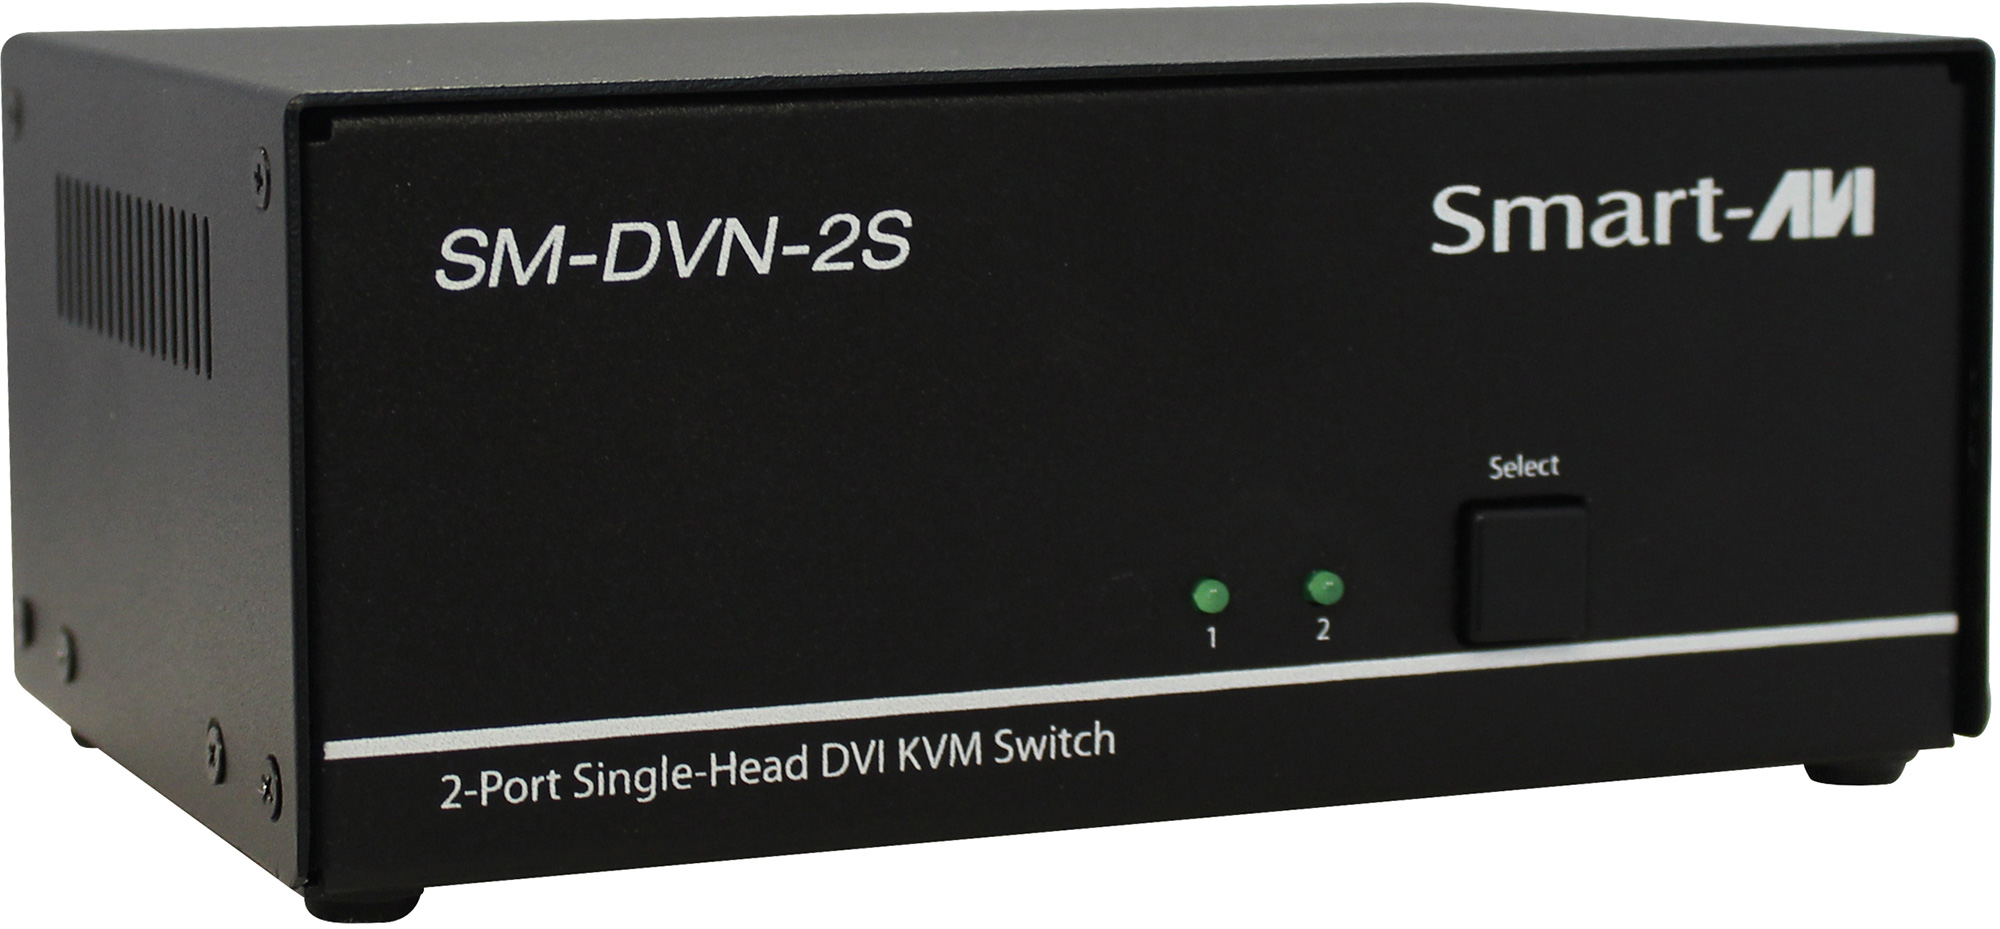 Smart AVI SM-DVN-2S Single Head Dual Link DVI-I KVM Switch with Audio and USB 2.0 Support - 2 Port SAVI-SM-DVN-2S